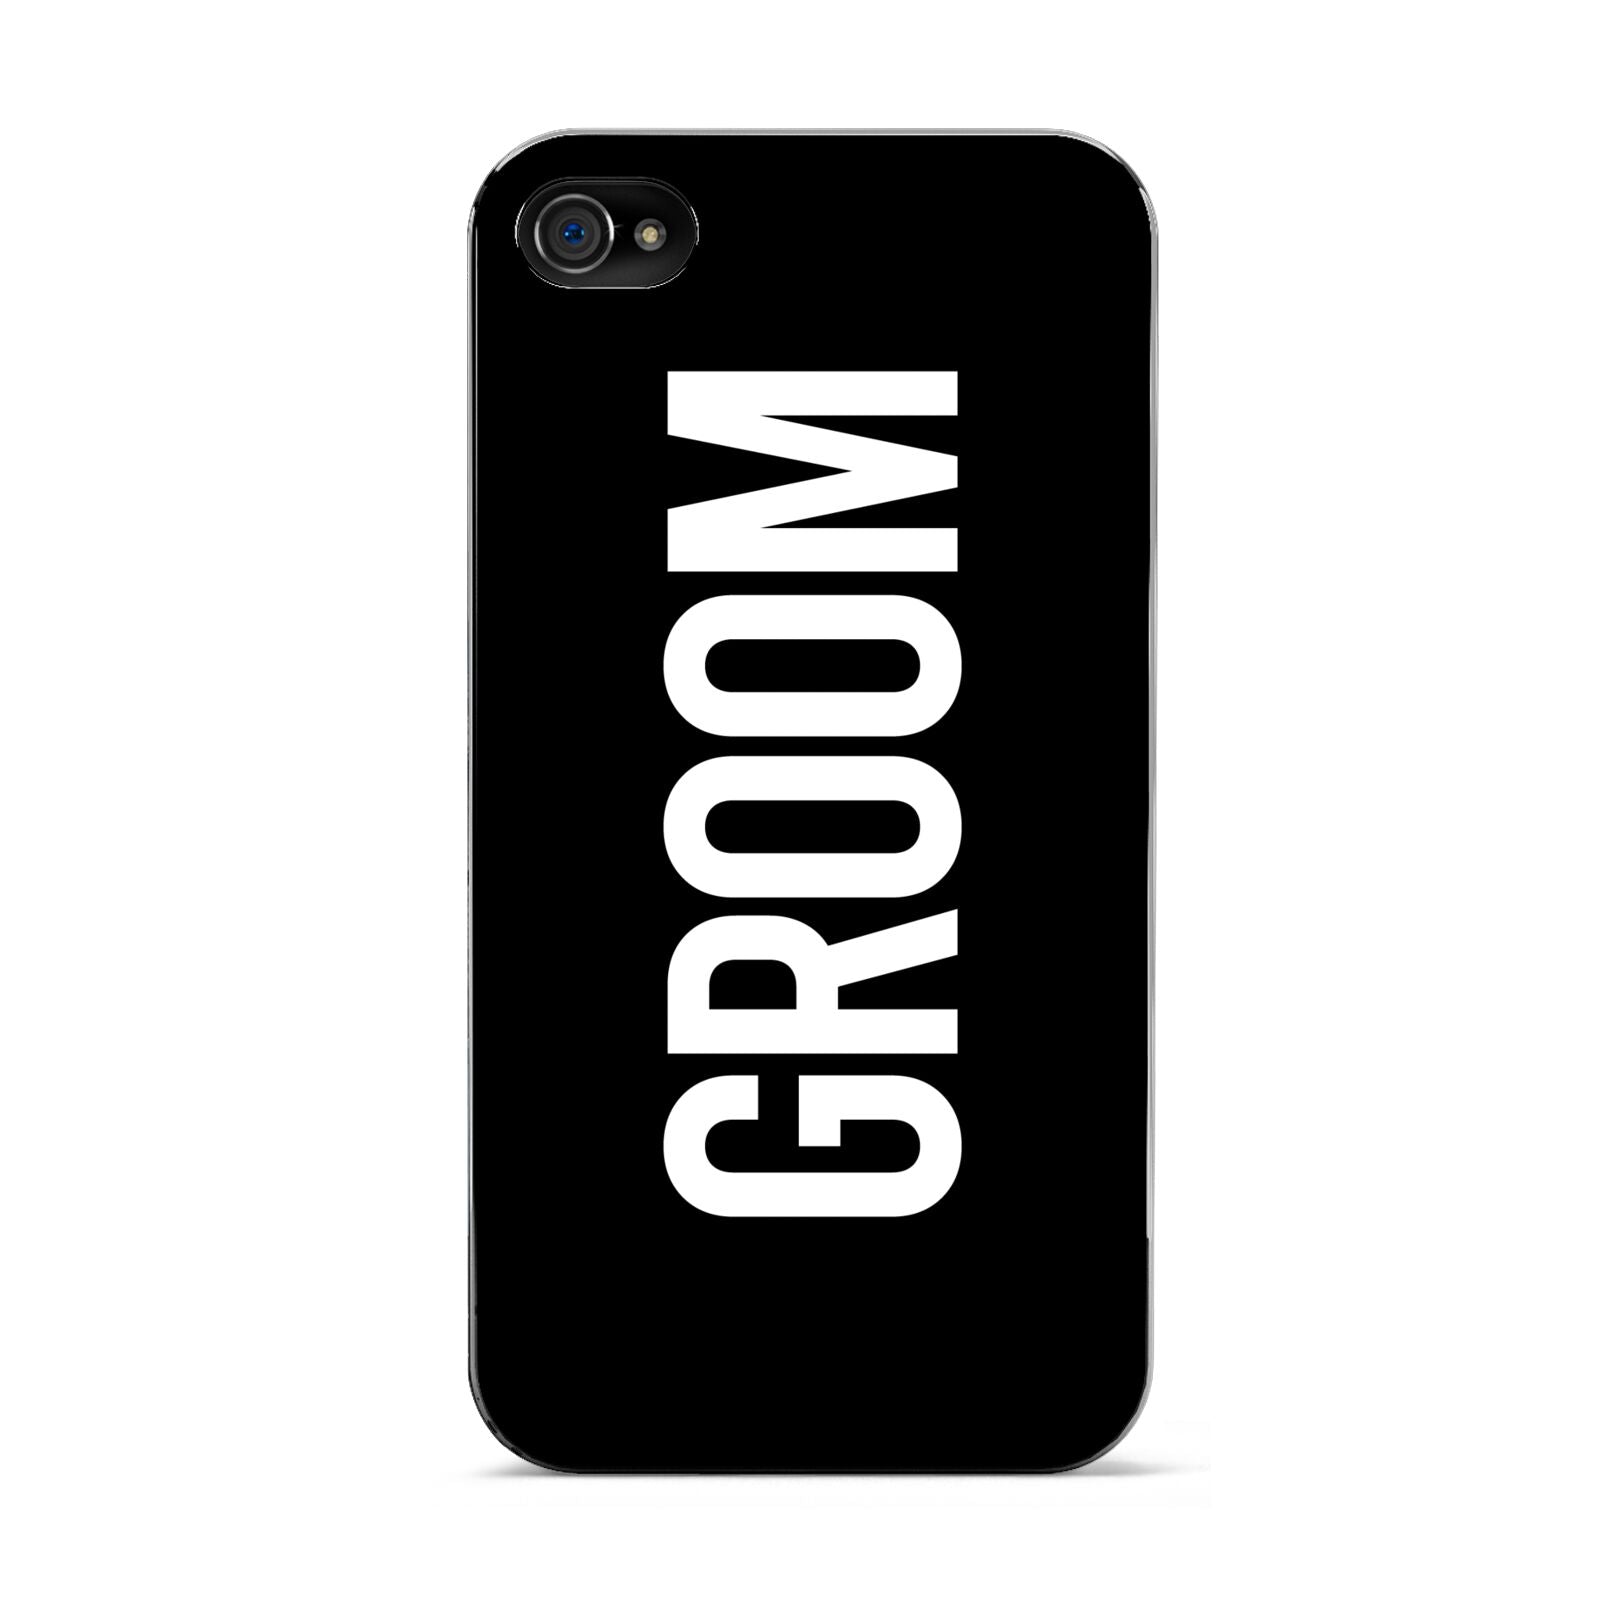 Groom Apple iPhone 4s Case